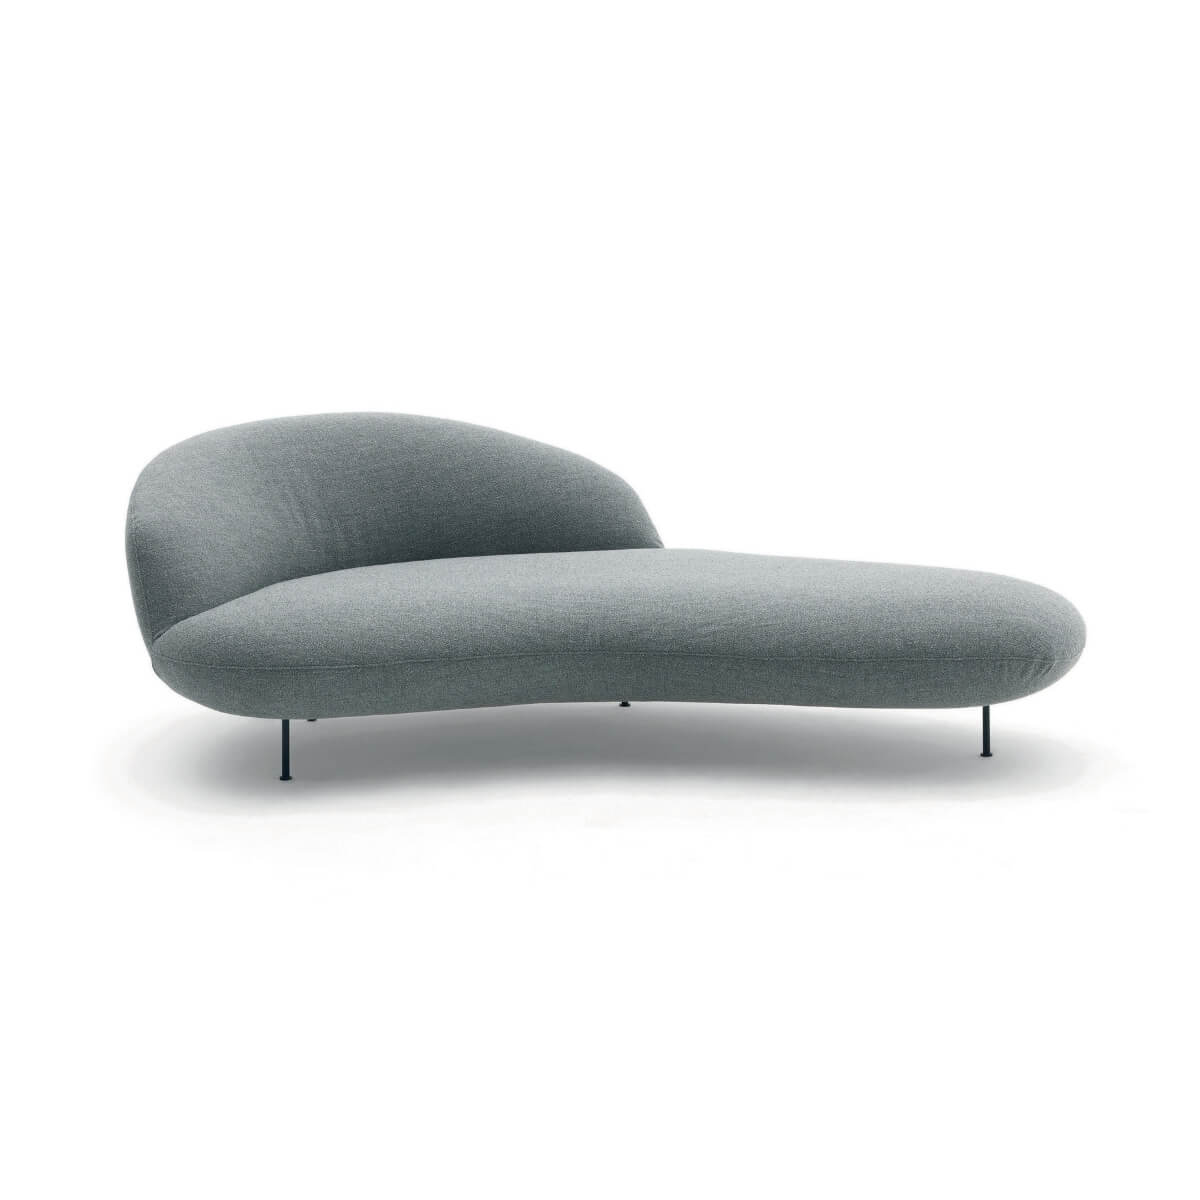 The SootheNest Cotton Linen Lounge Chair: A Serene Escape